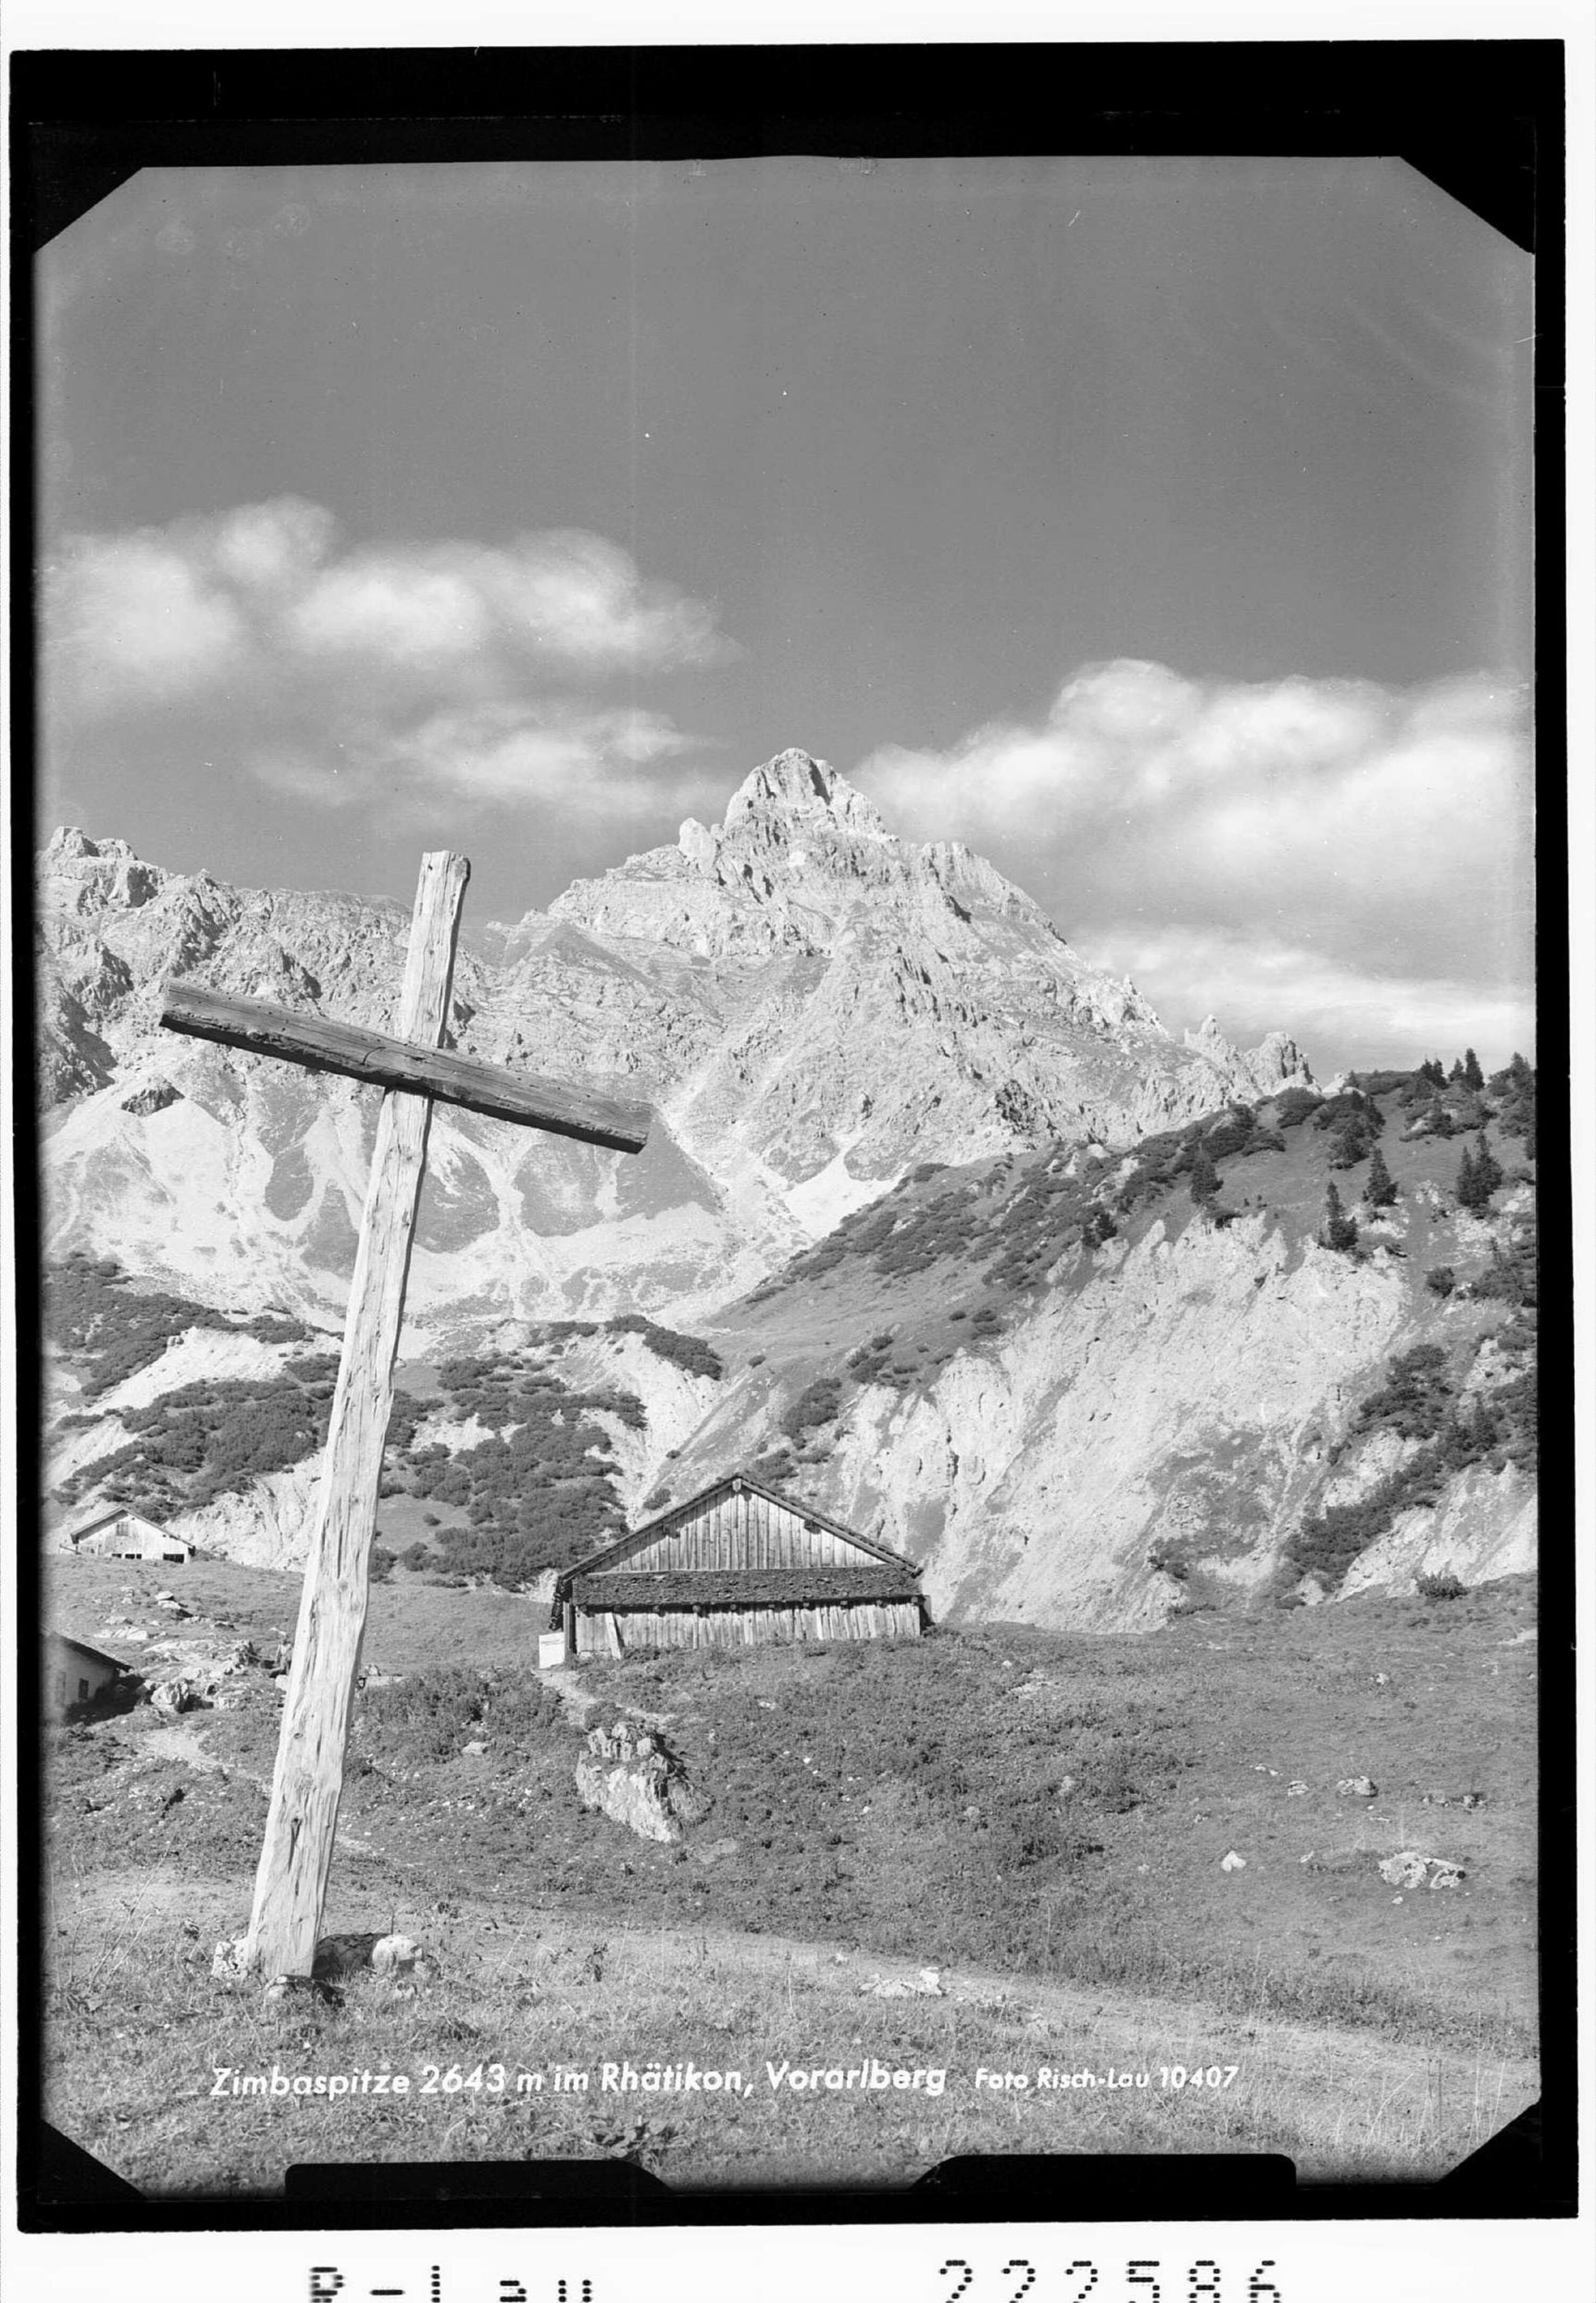 Zimbaspitze 2643 m im Rhätikon / Vorarlberg></div>


    <hr>
    <div class=